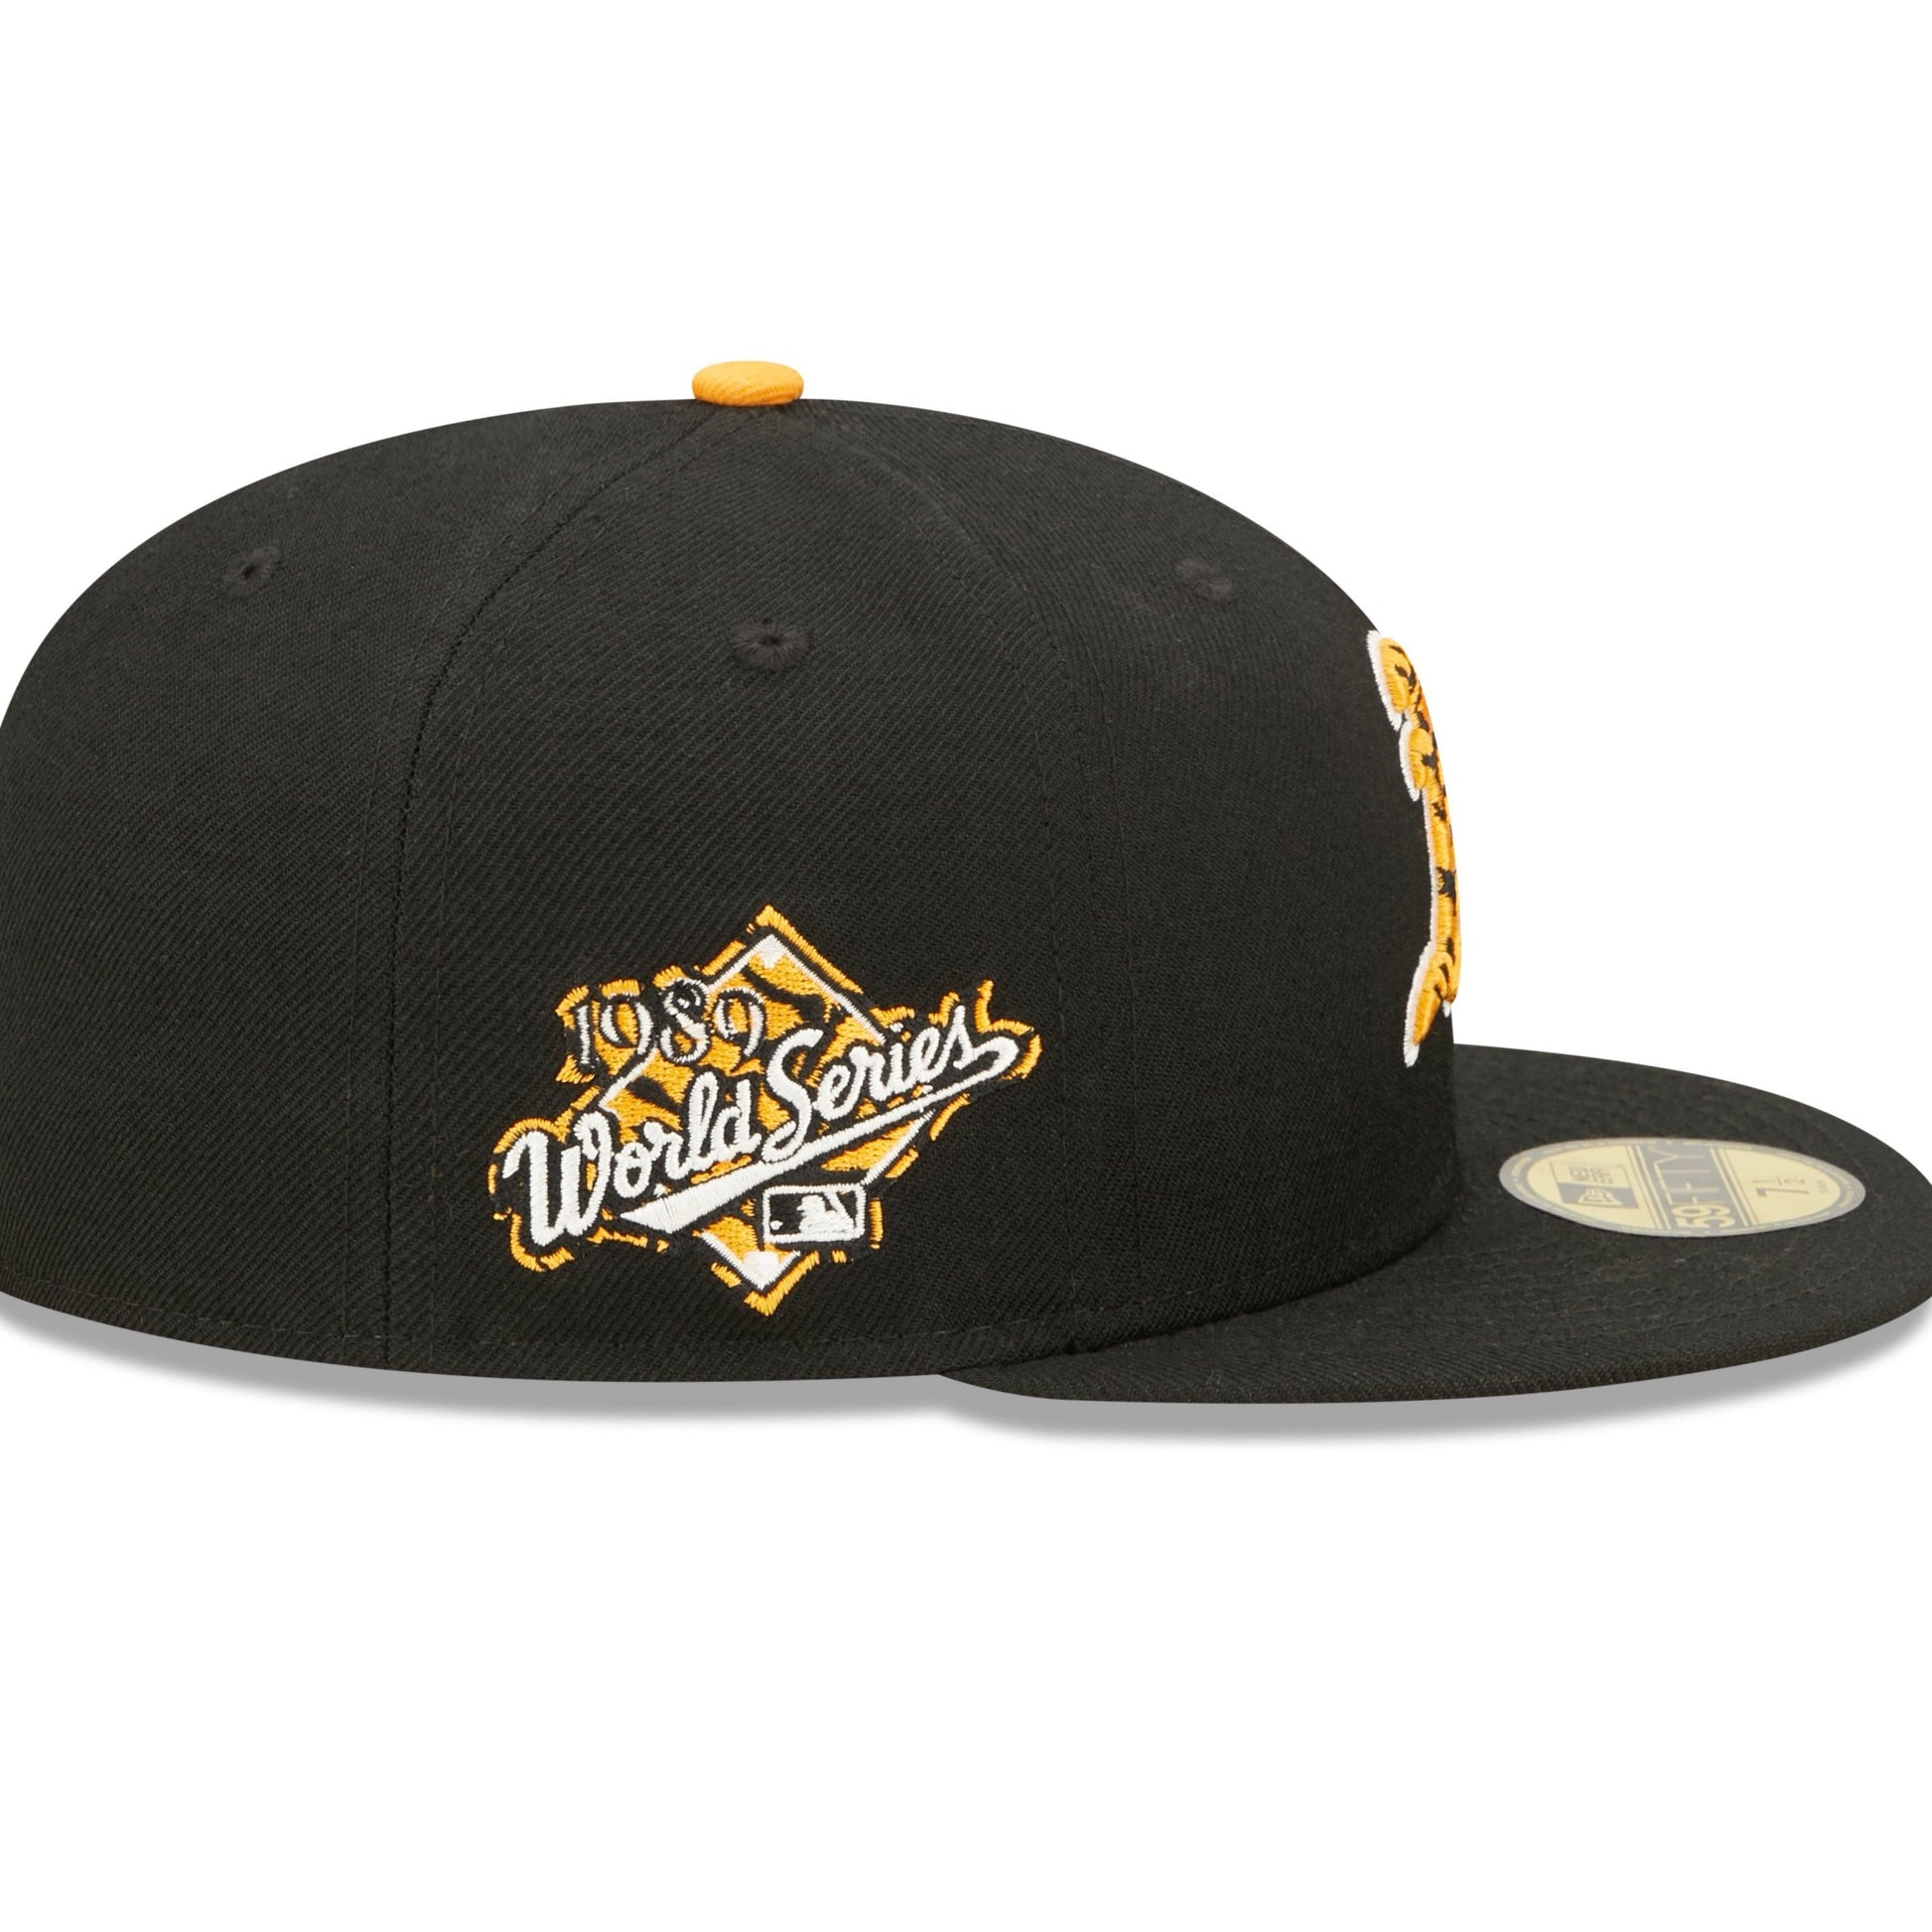 Oakland A's '89 WS 9FIFTY New Era Green & Yellow Snapback Hat – USA CAP KING